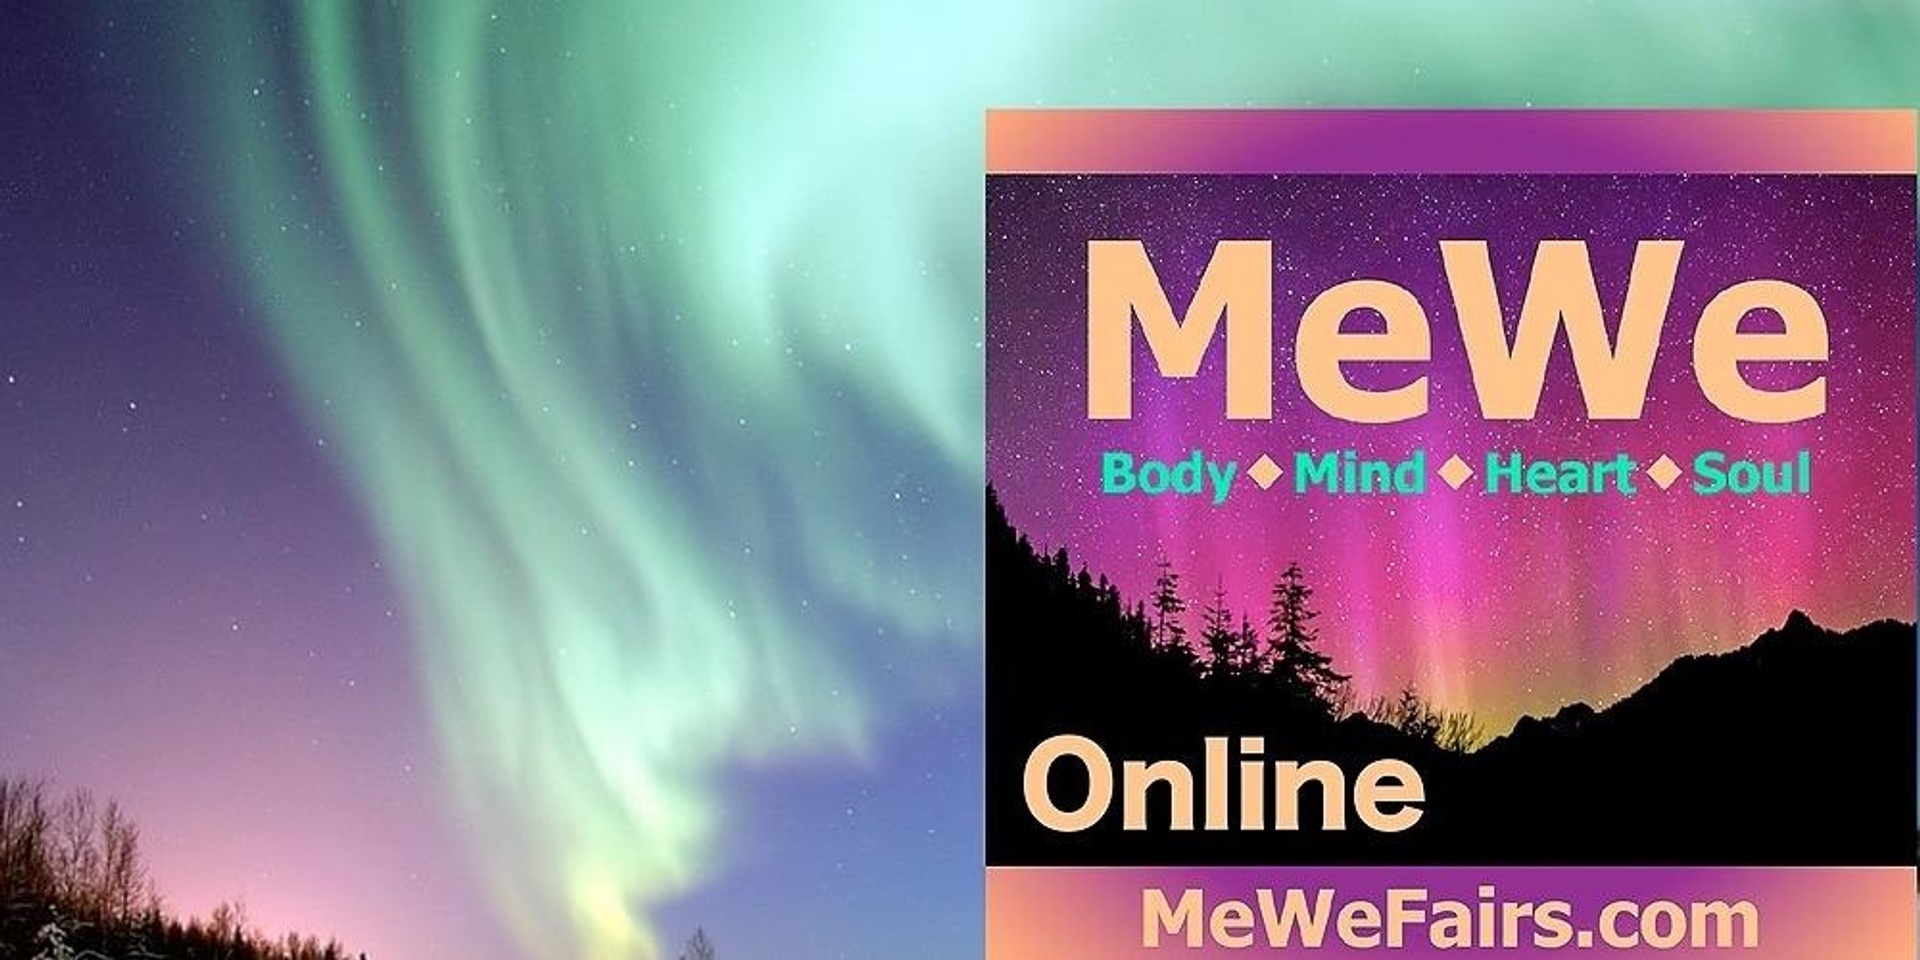 Online Metaphysics & Wellness MeWe Fair for Energizing Body Mind Heart Soul (Sliding Scale)